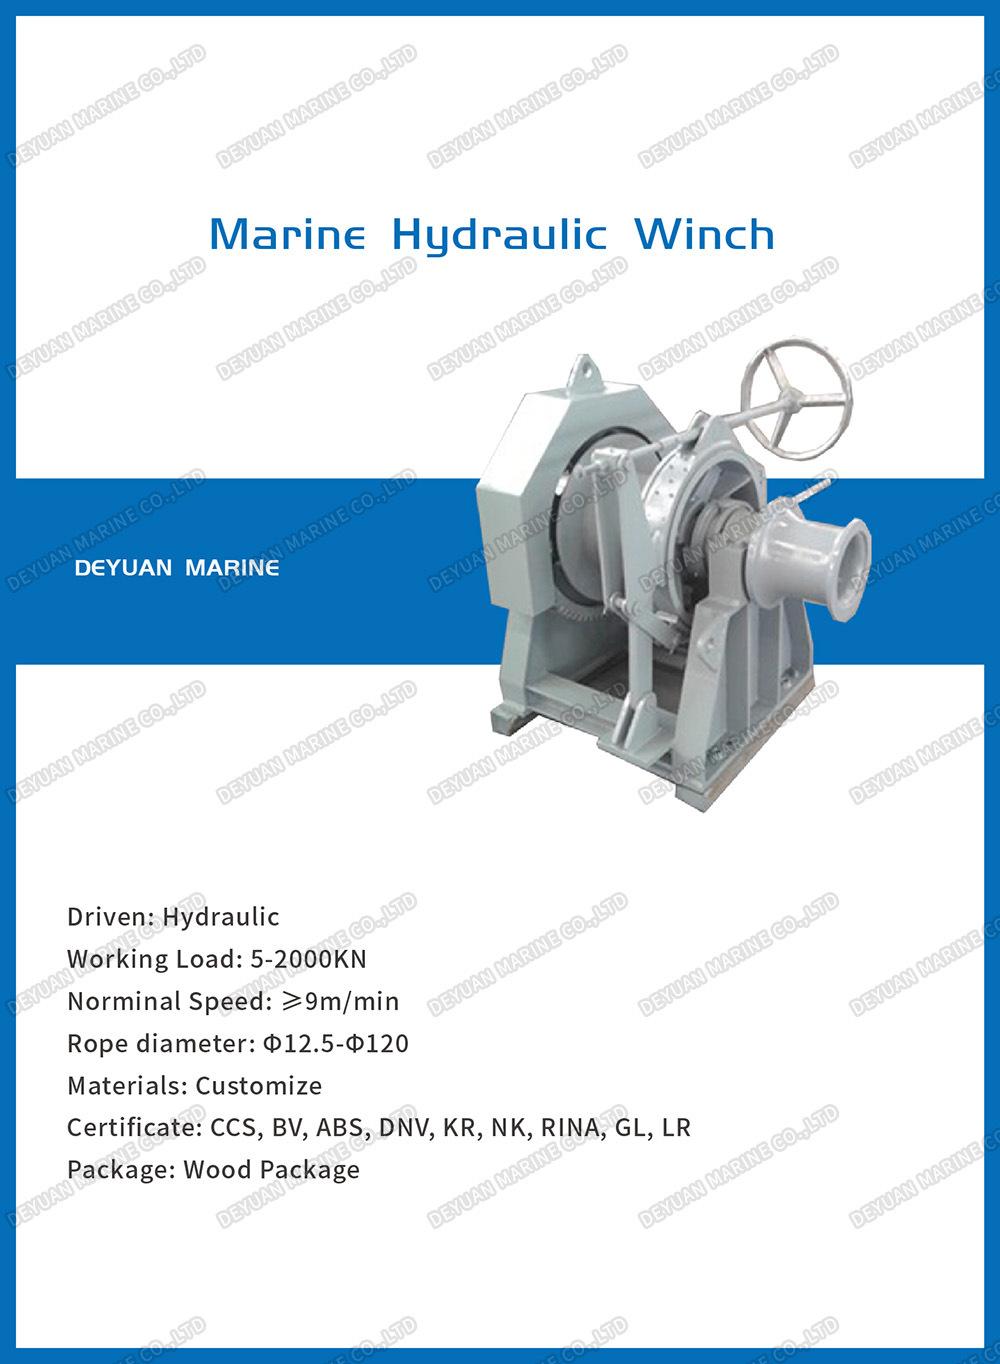 Marine Hydraulic Single Side Mooring Winch with One Drum